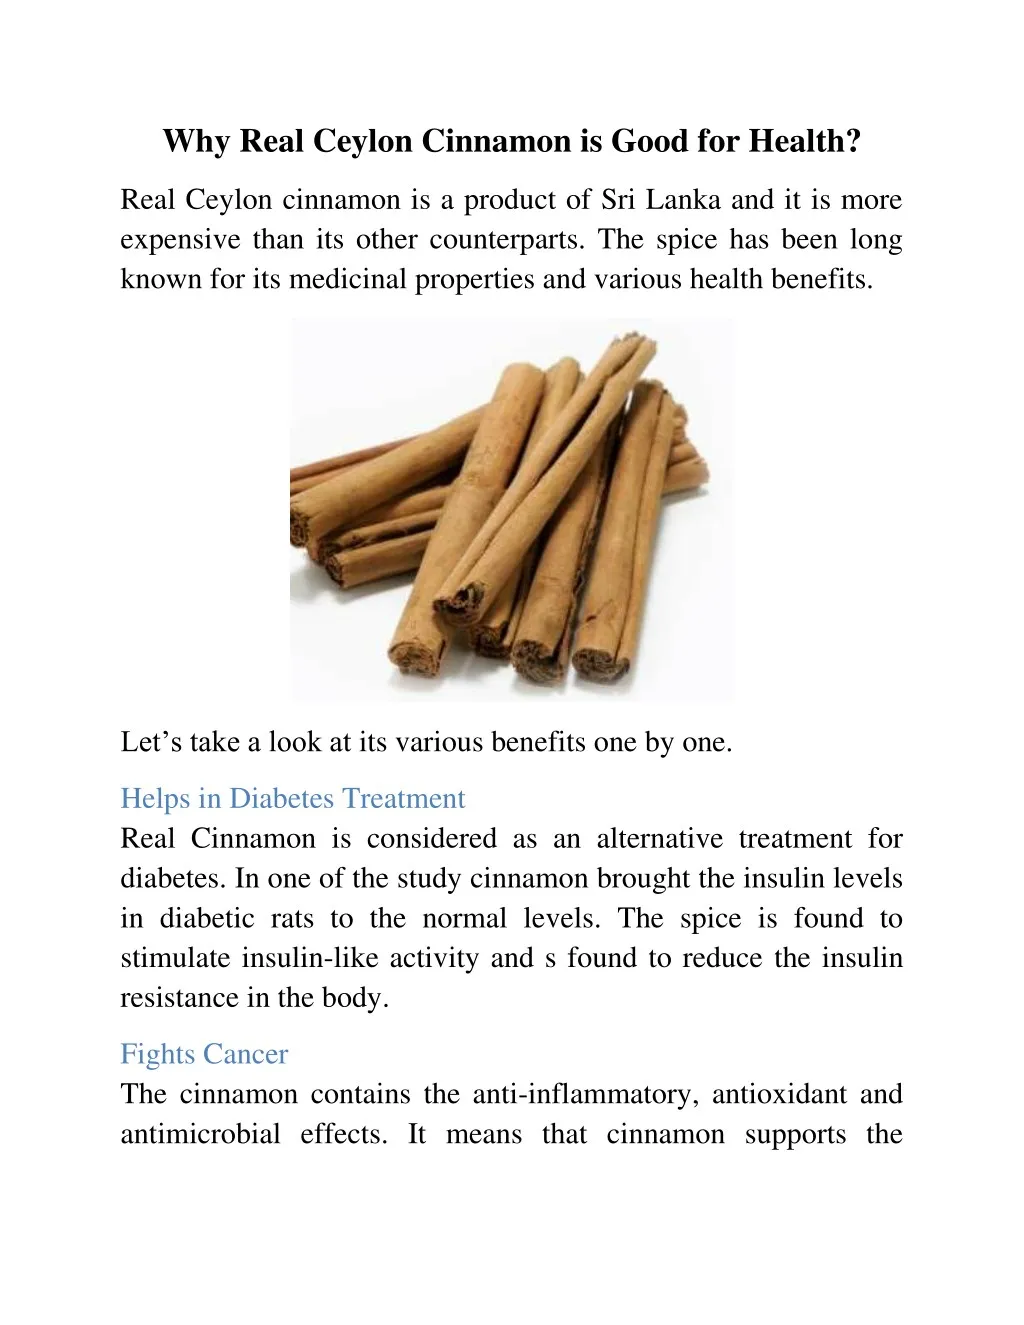 why real ceylon cinnamon is good for health